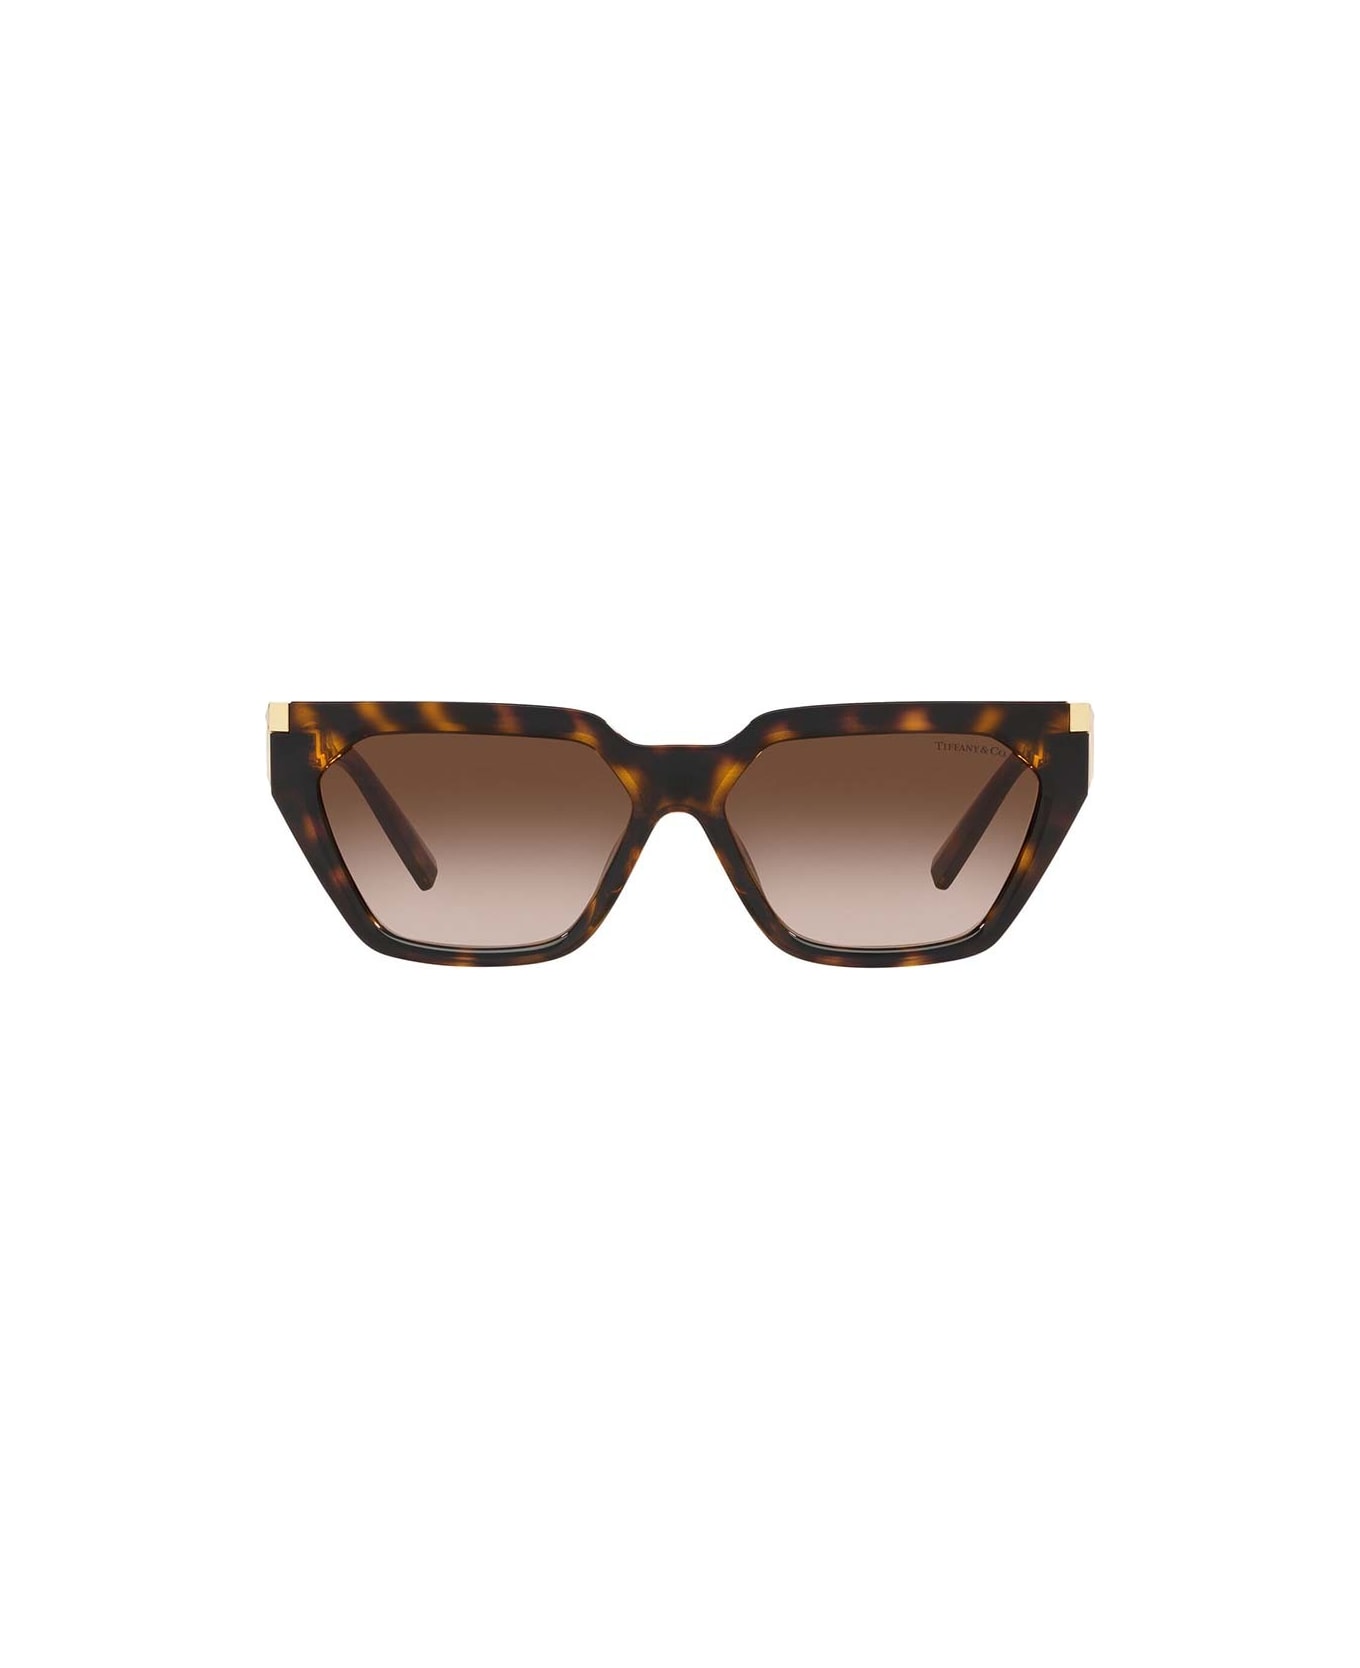 Tiffany & Co. Sunglasses - Marrone/Marrone